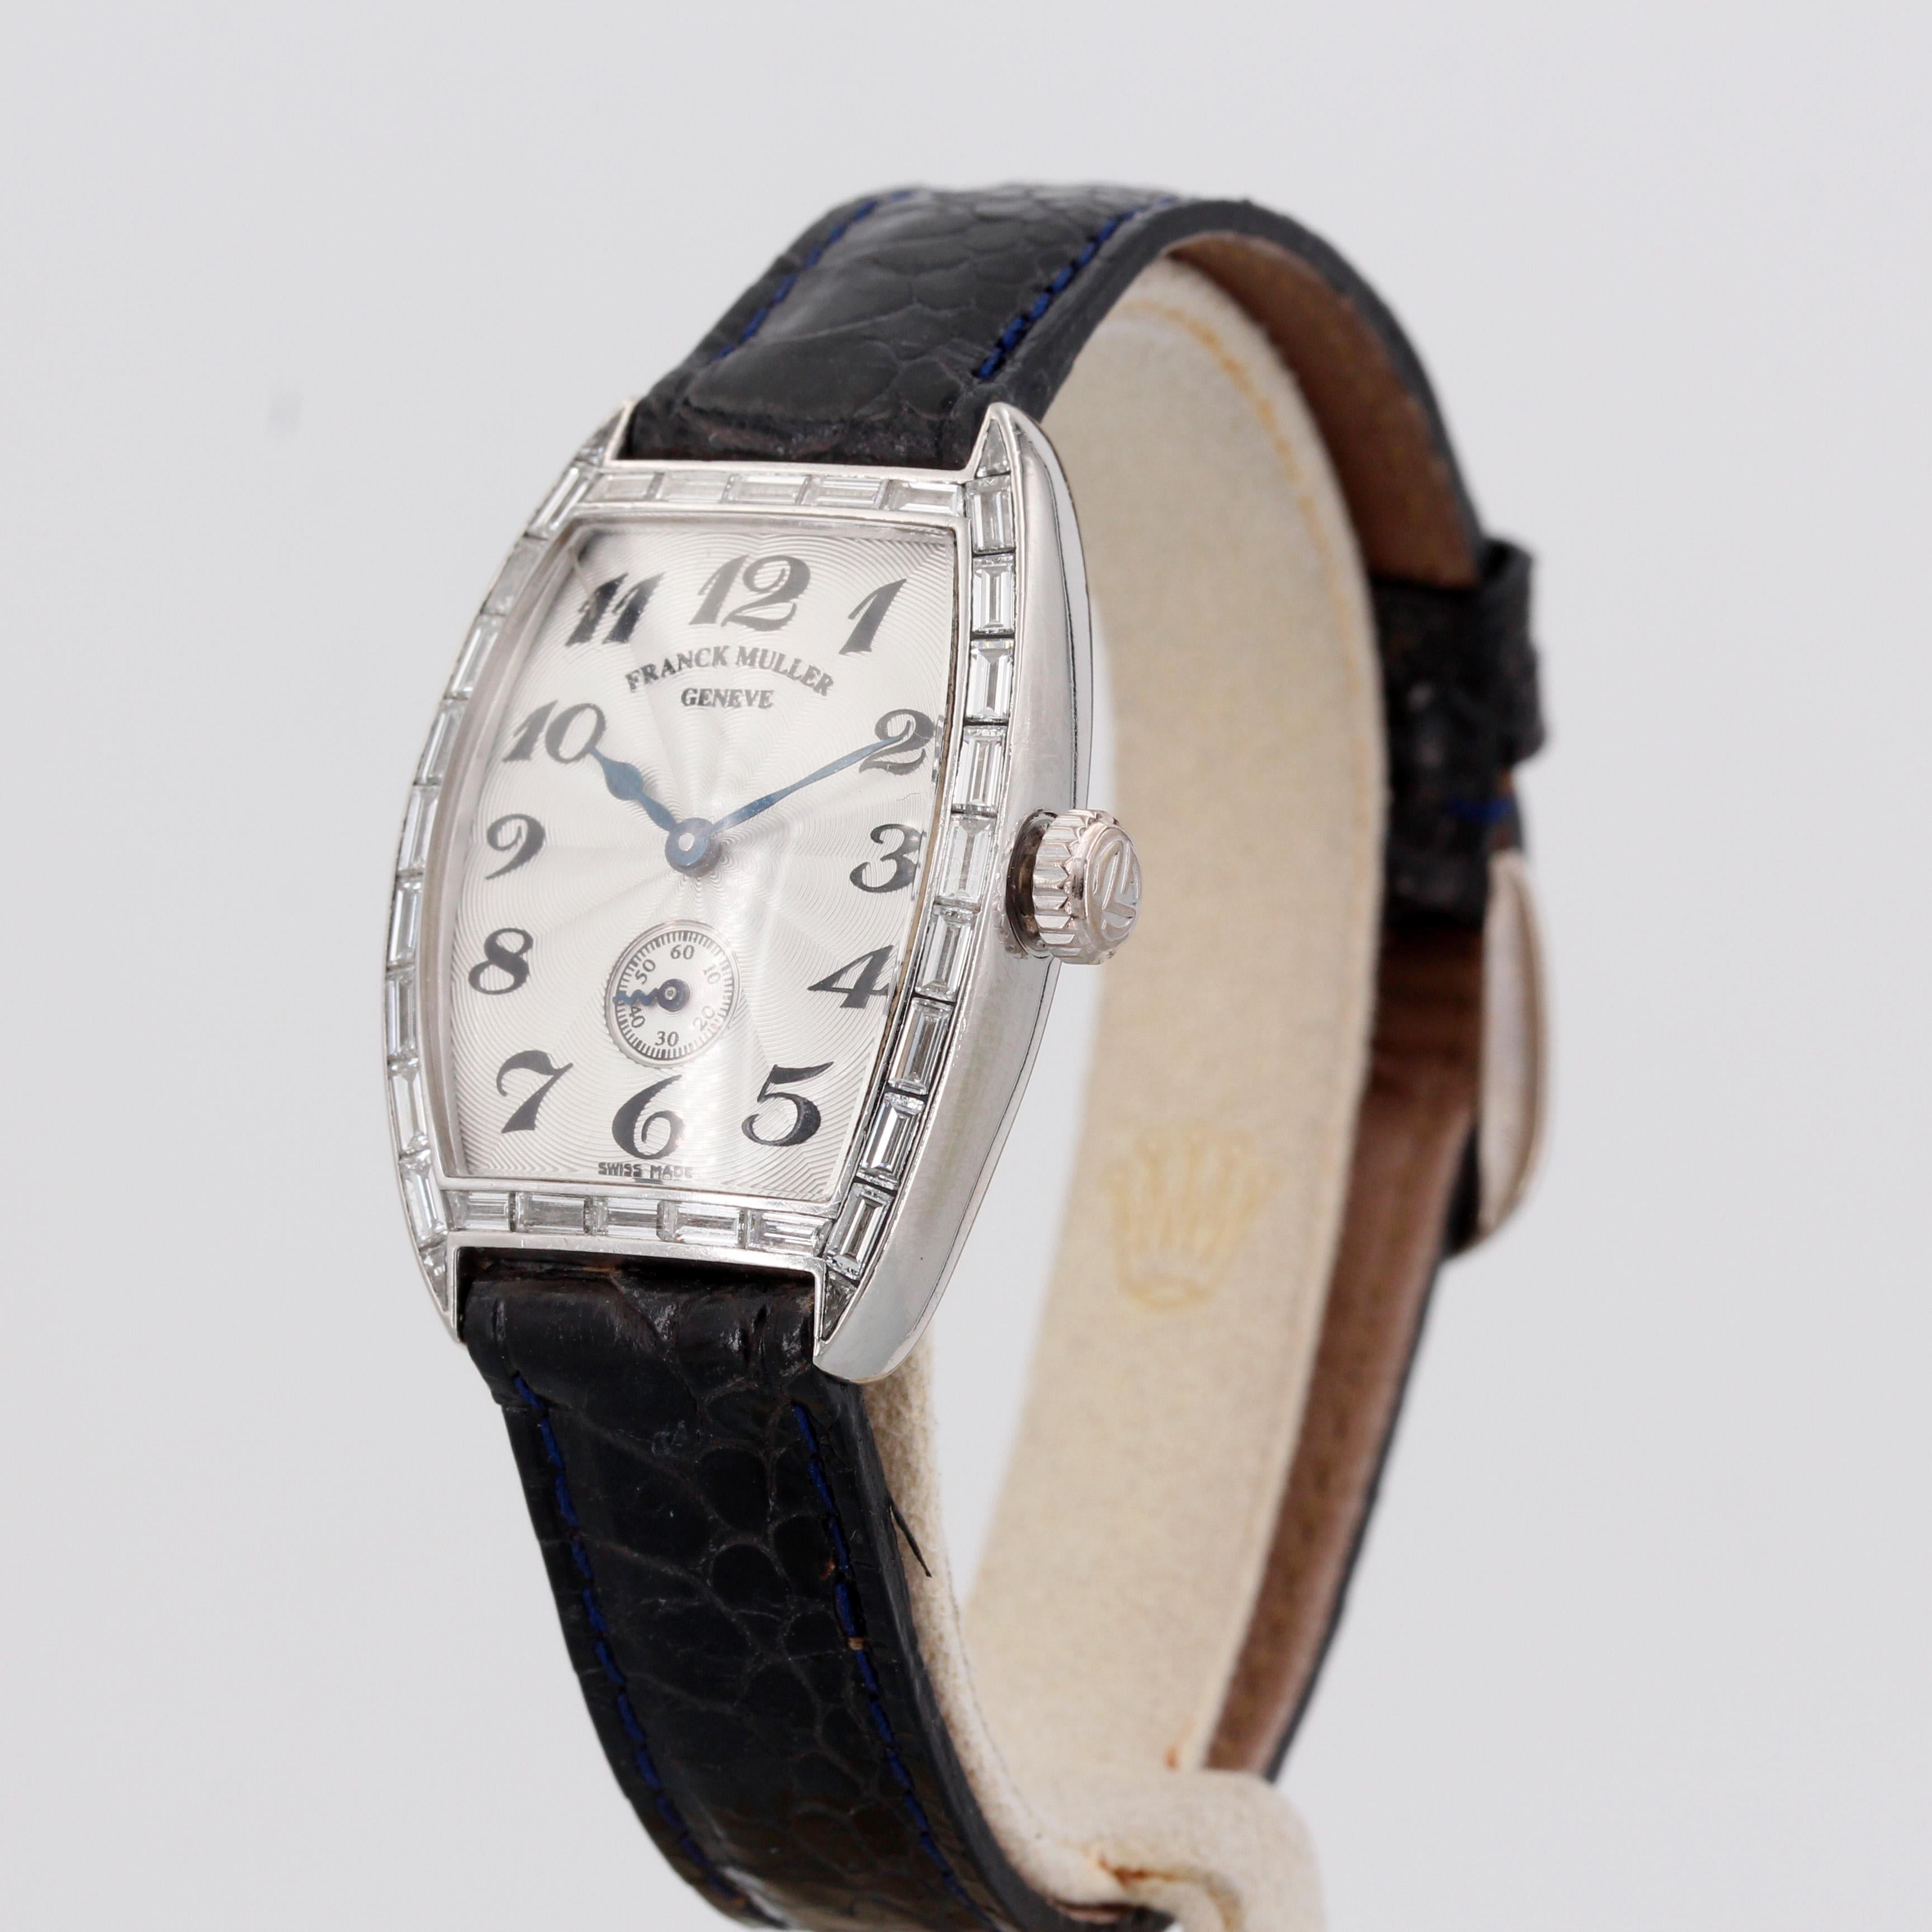 Franck Muller Vintage Damenuhr
Referenz: 1750 S6 BAG
MATERIAL: Platin
Uhrwerk: Handaufzug
Durchmesser: 25x35mm
Zifferblatt: Silber
Armbänder: Leder
Diamanten: Baguetteschliff